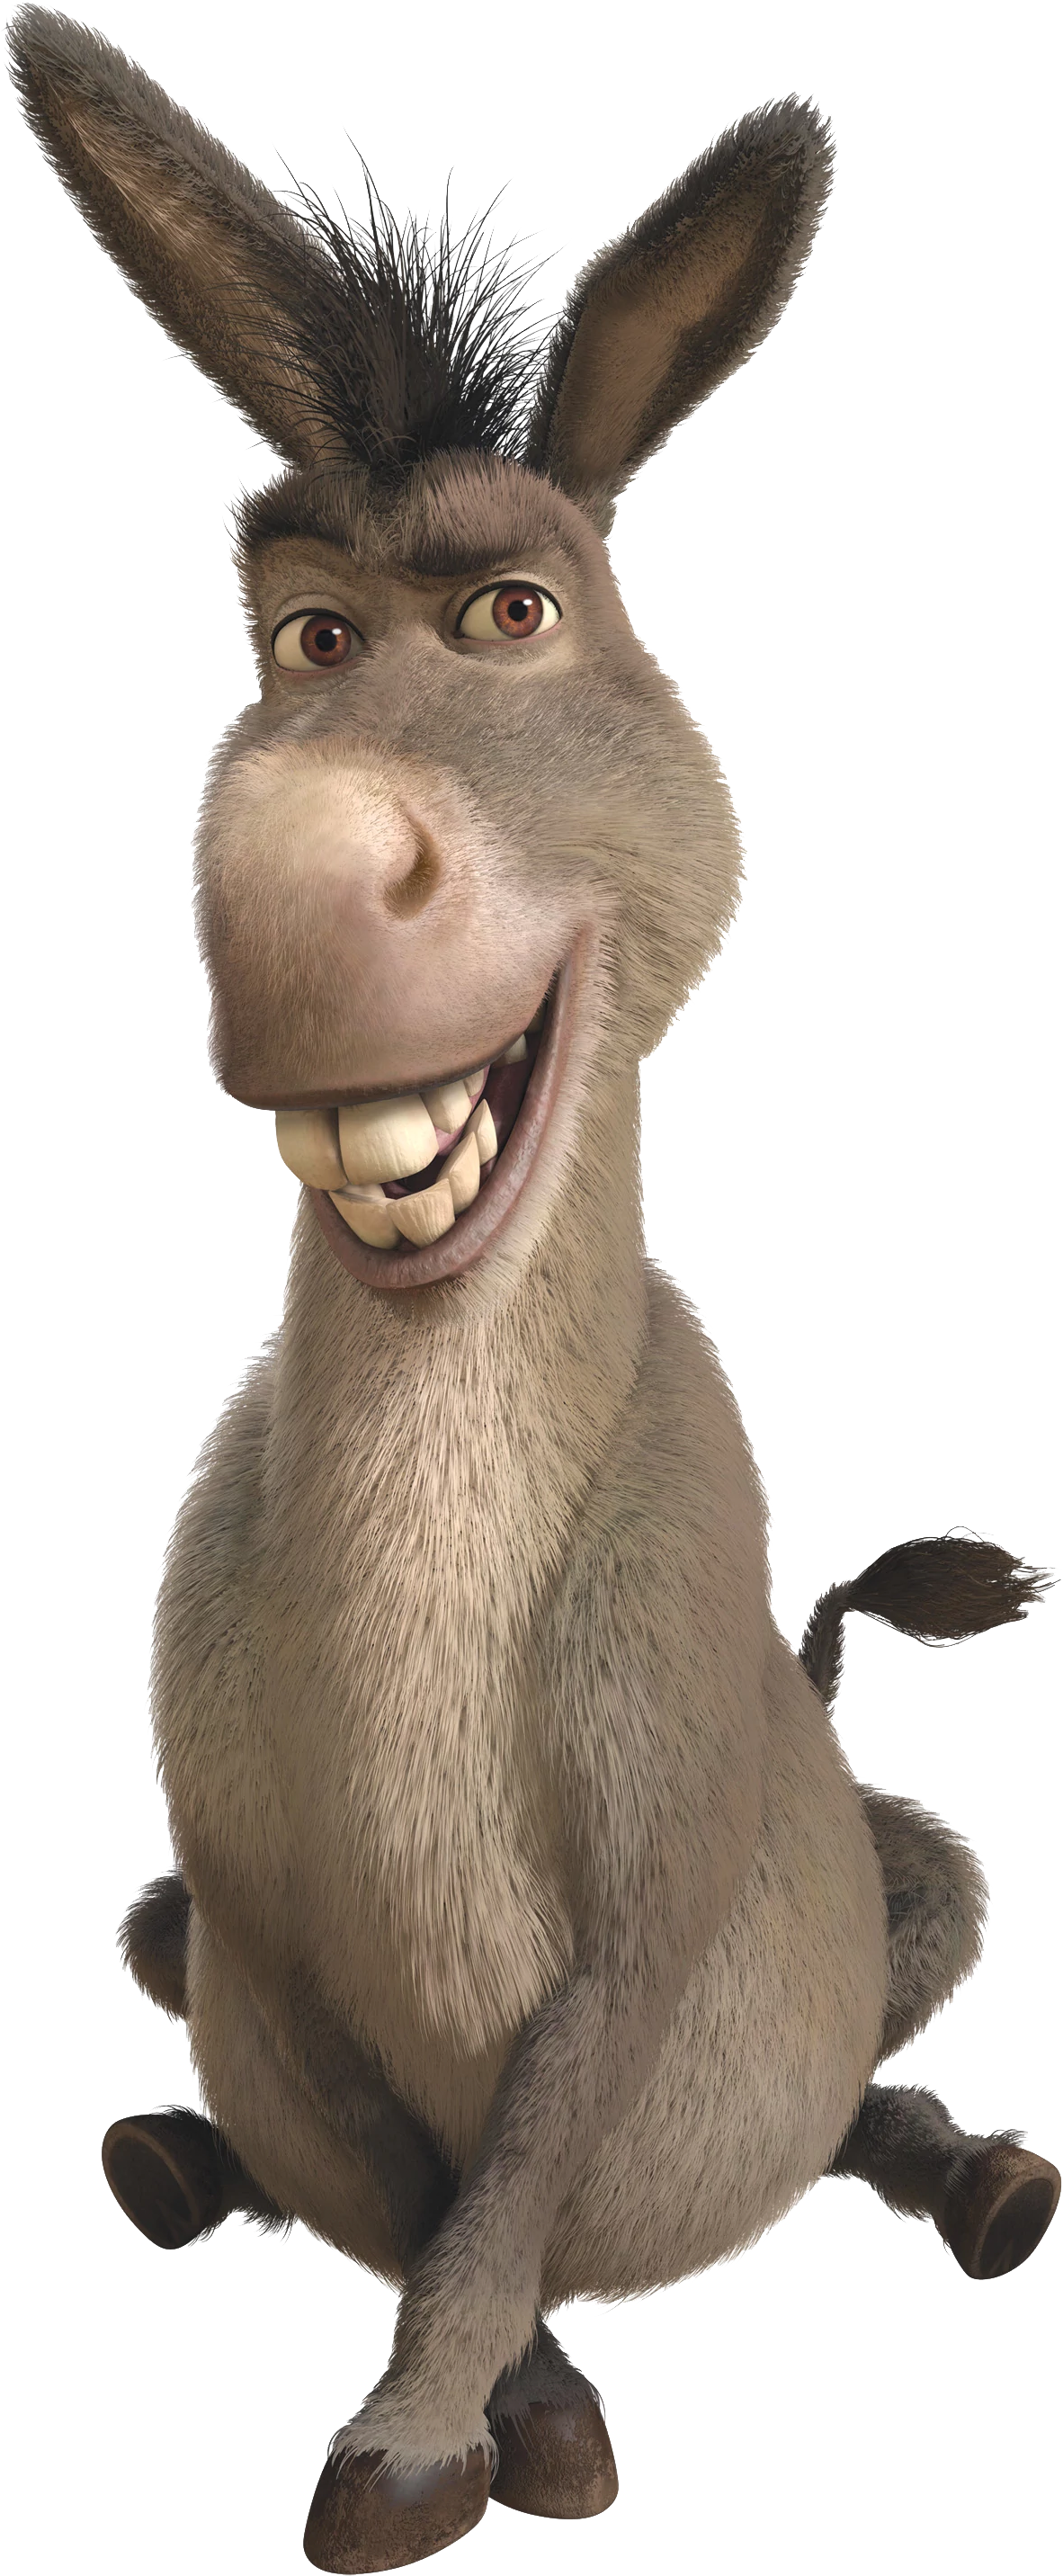 Donkey From Shrek Name - Imagens Dos Personagens Do Shrek, HD Png Download  - 947x1500 (#5443078) - PinPng